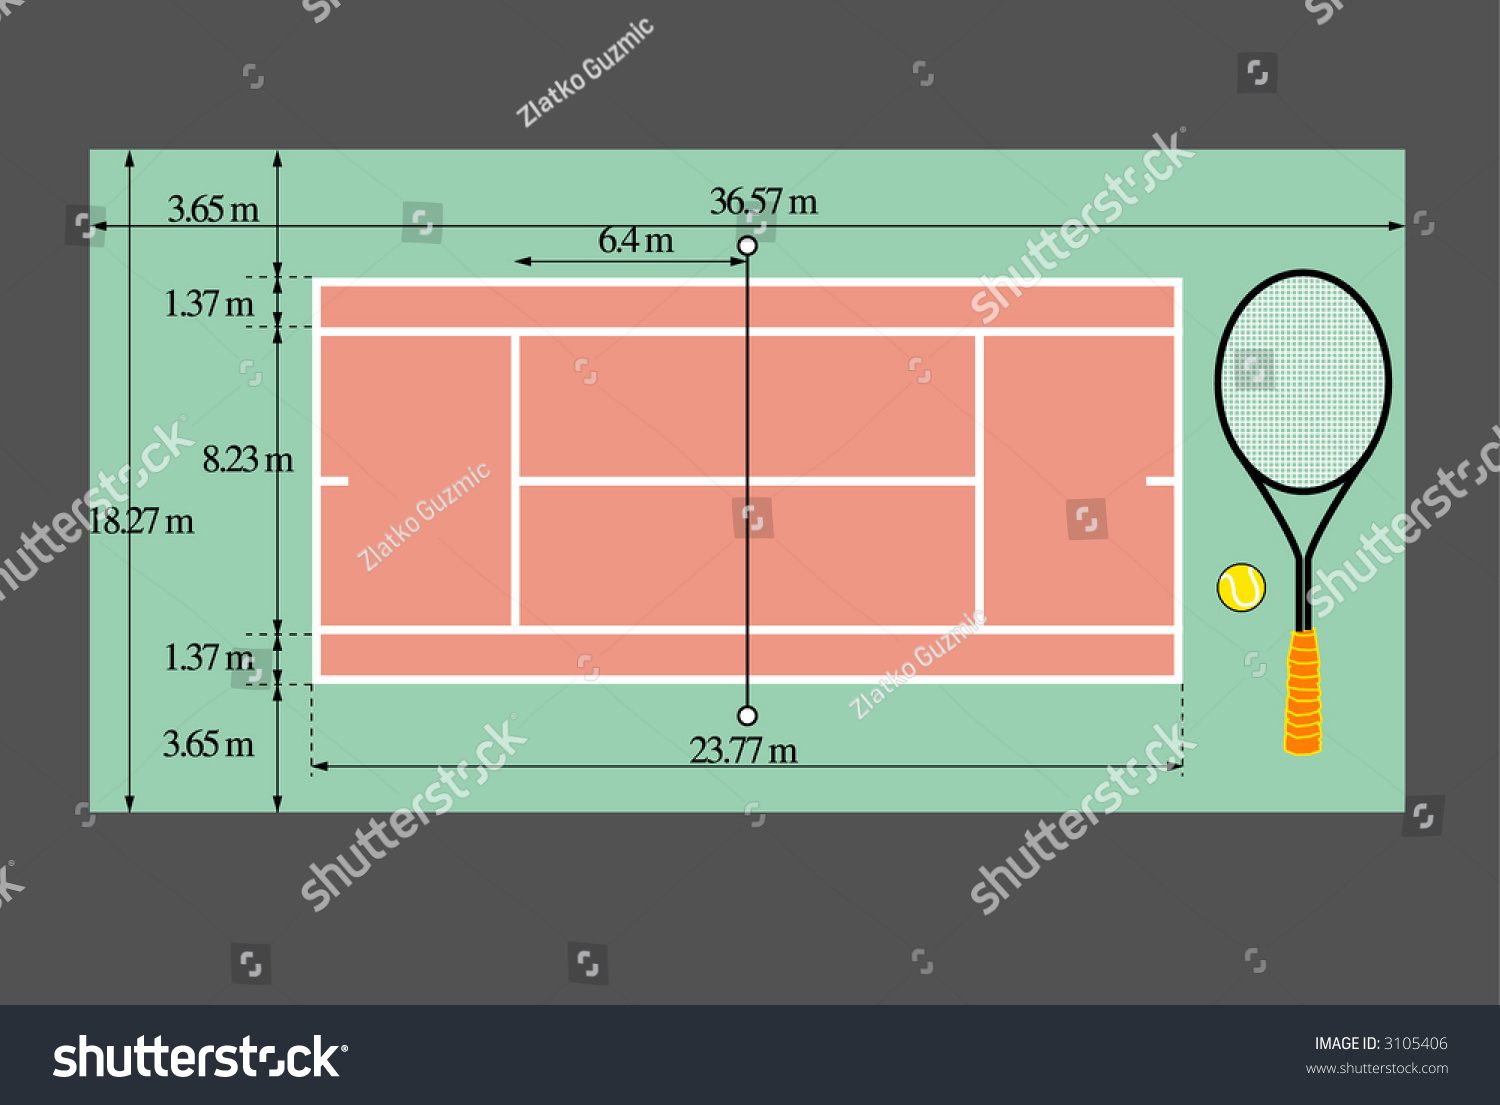 tennis table statistic Dimensions Tennis Vector Terrain Stock   Shutterstock 3105406